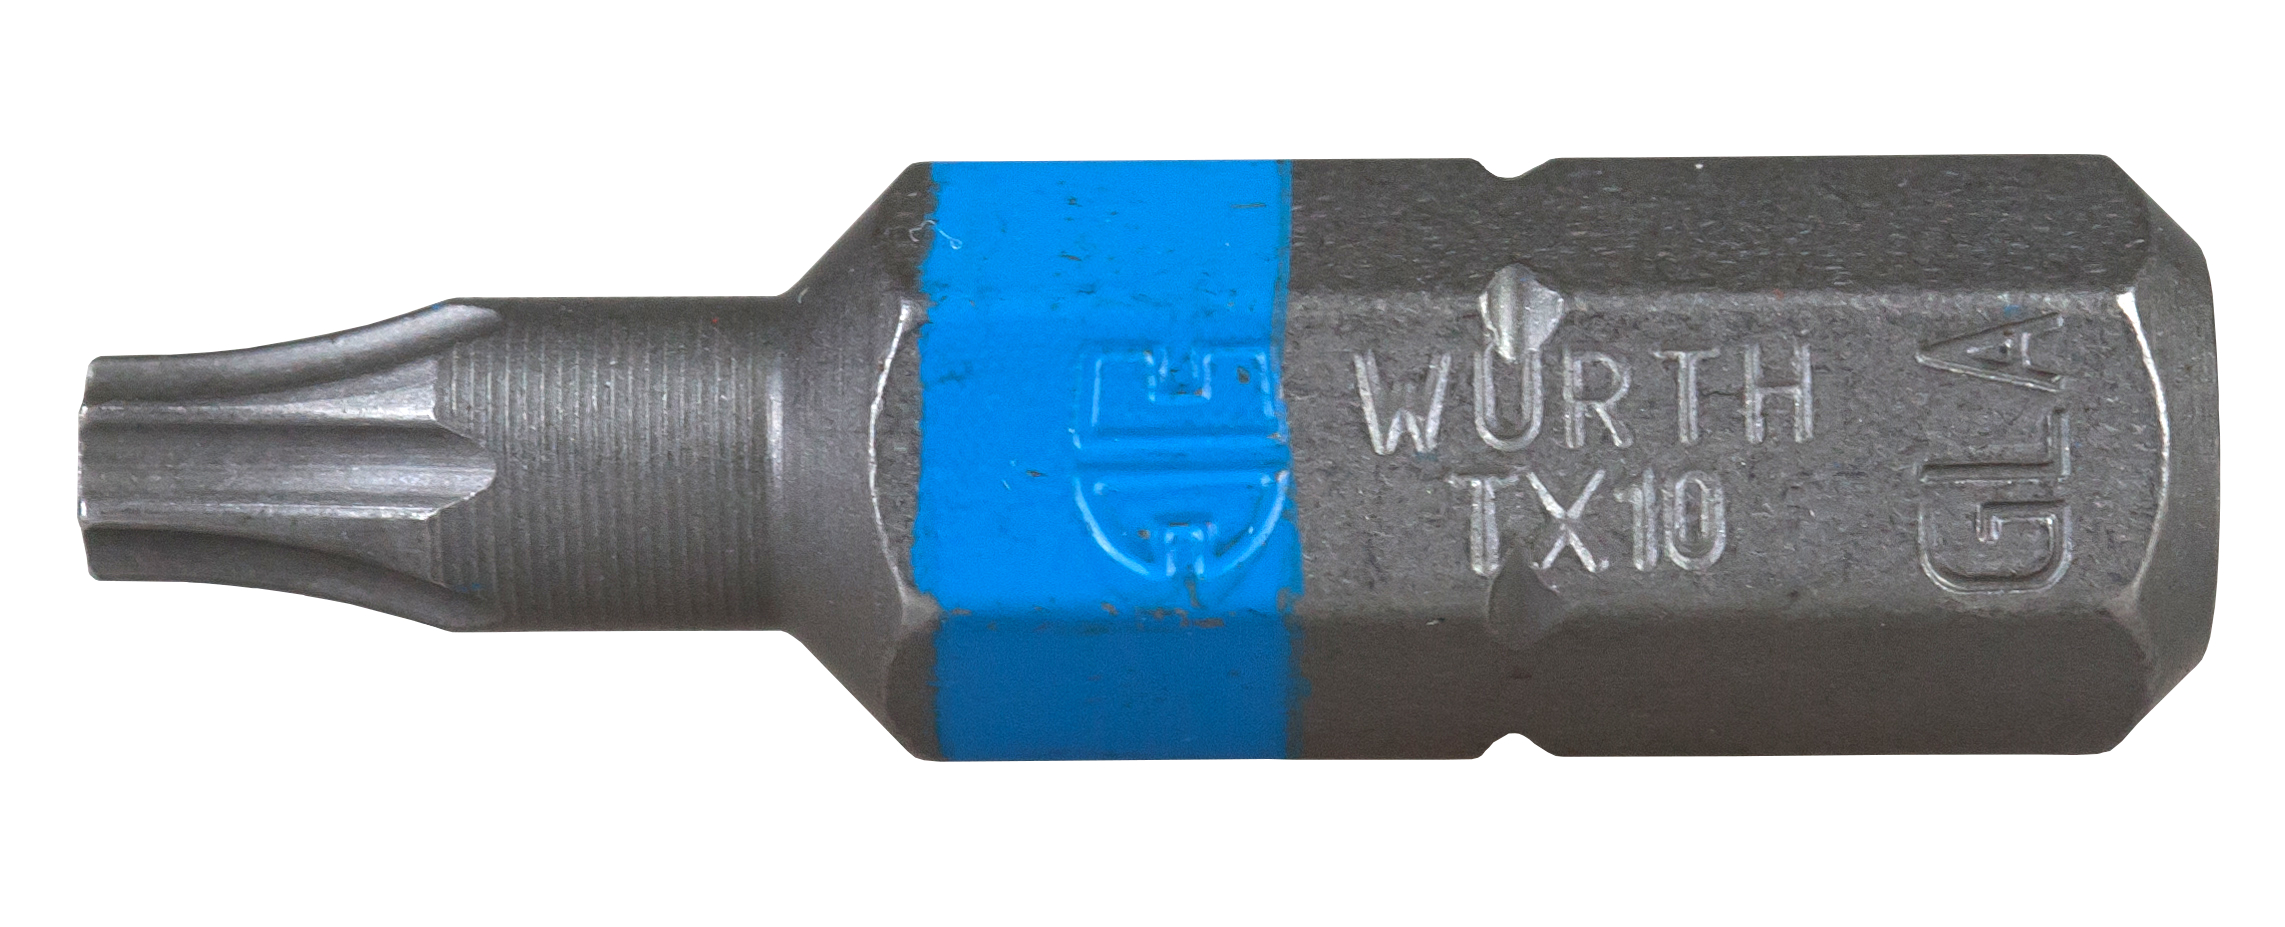 Foto: Bit 1/4" Torx TX10 blau Länge:26mm (c) Schrack